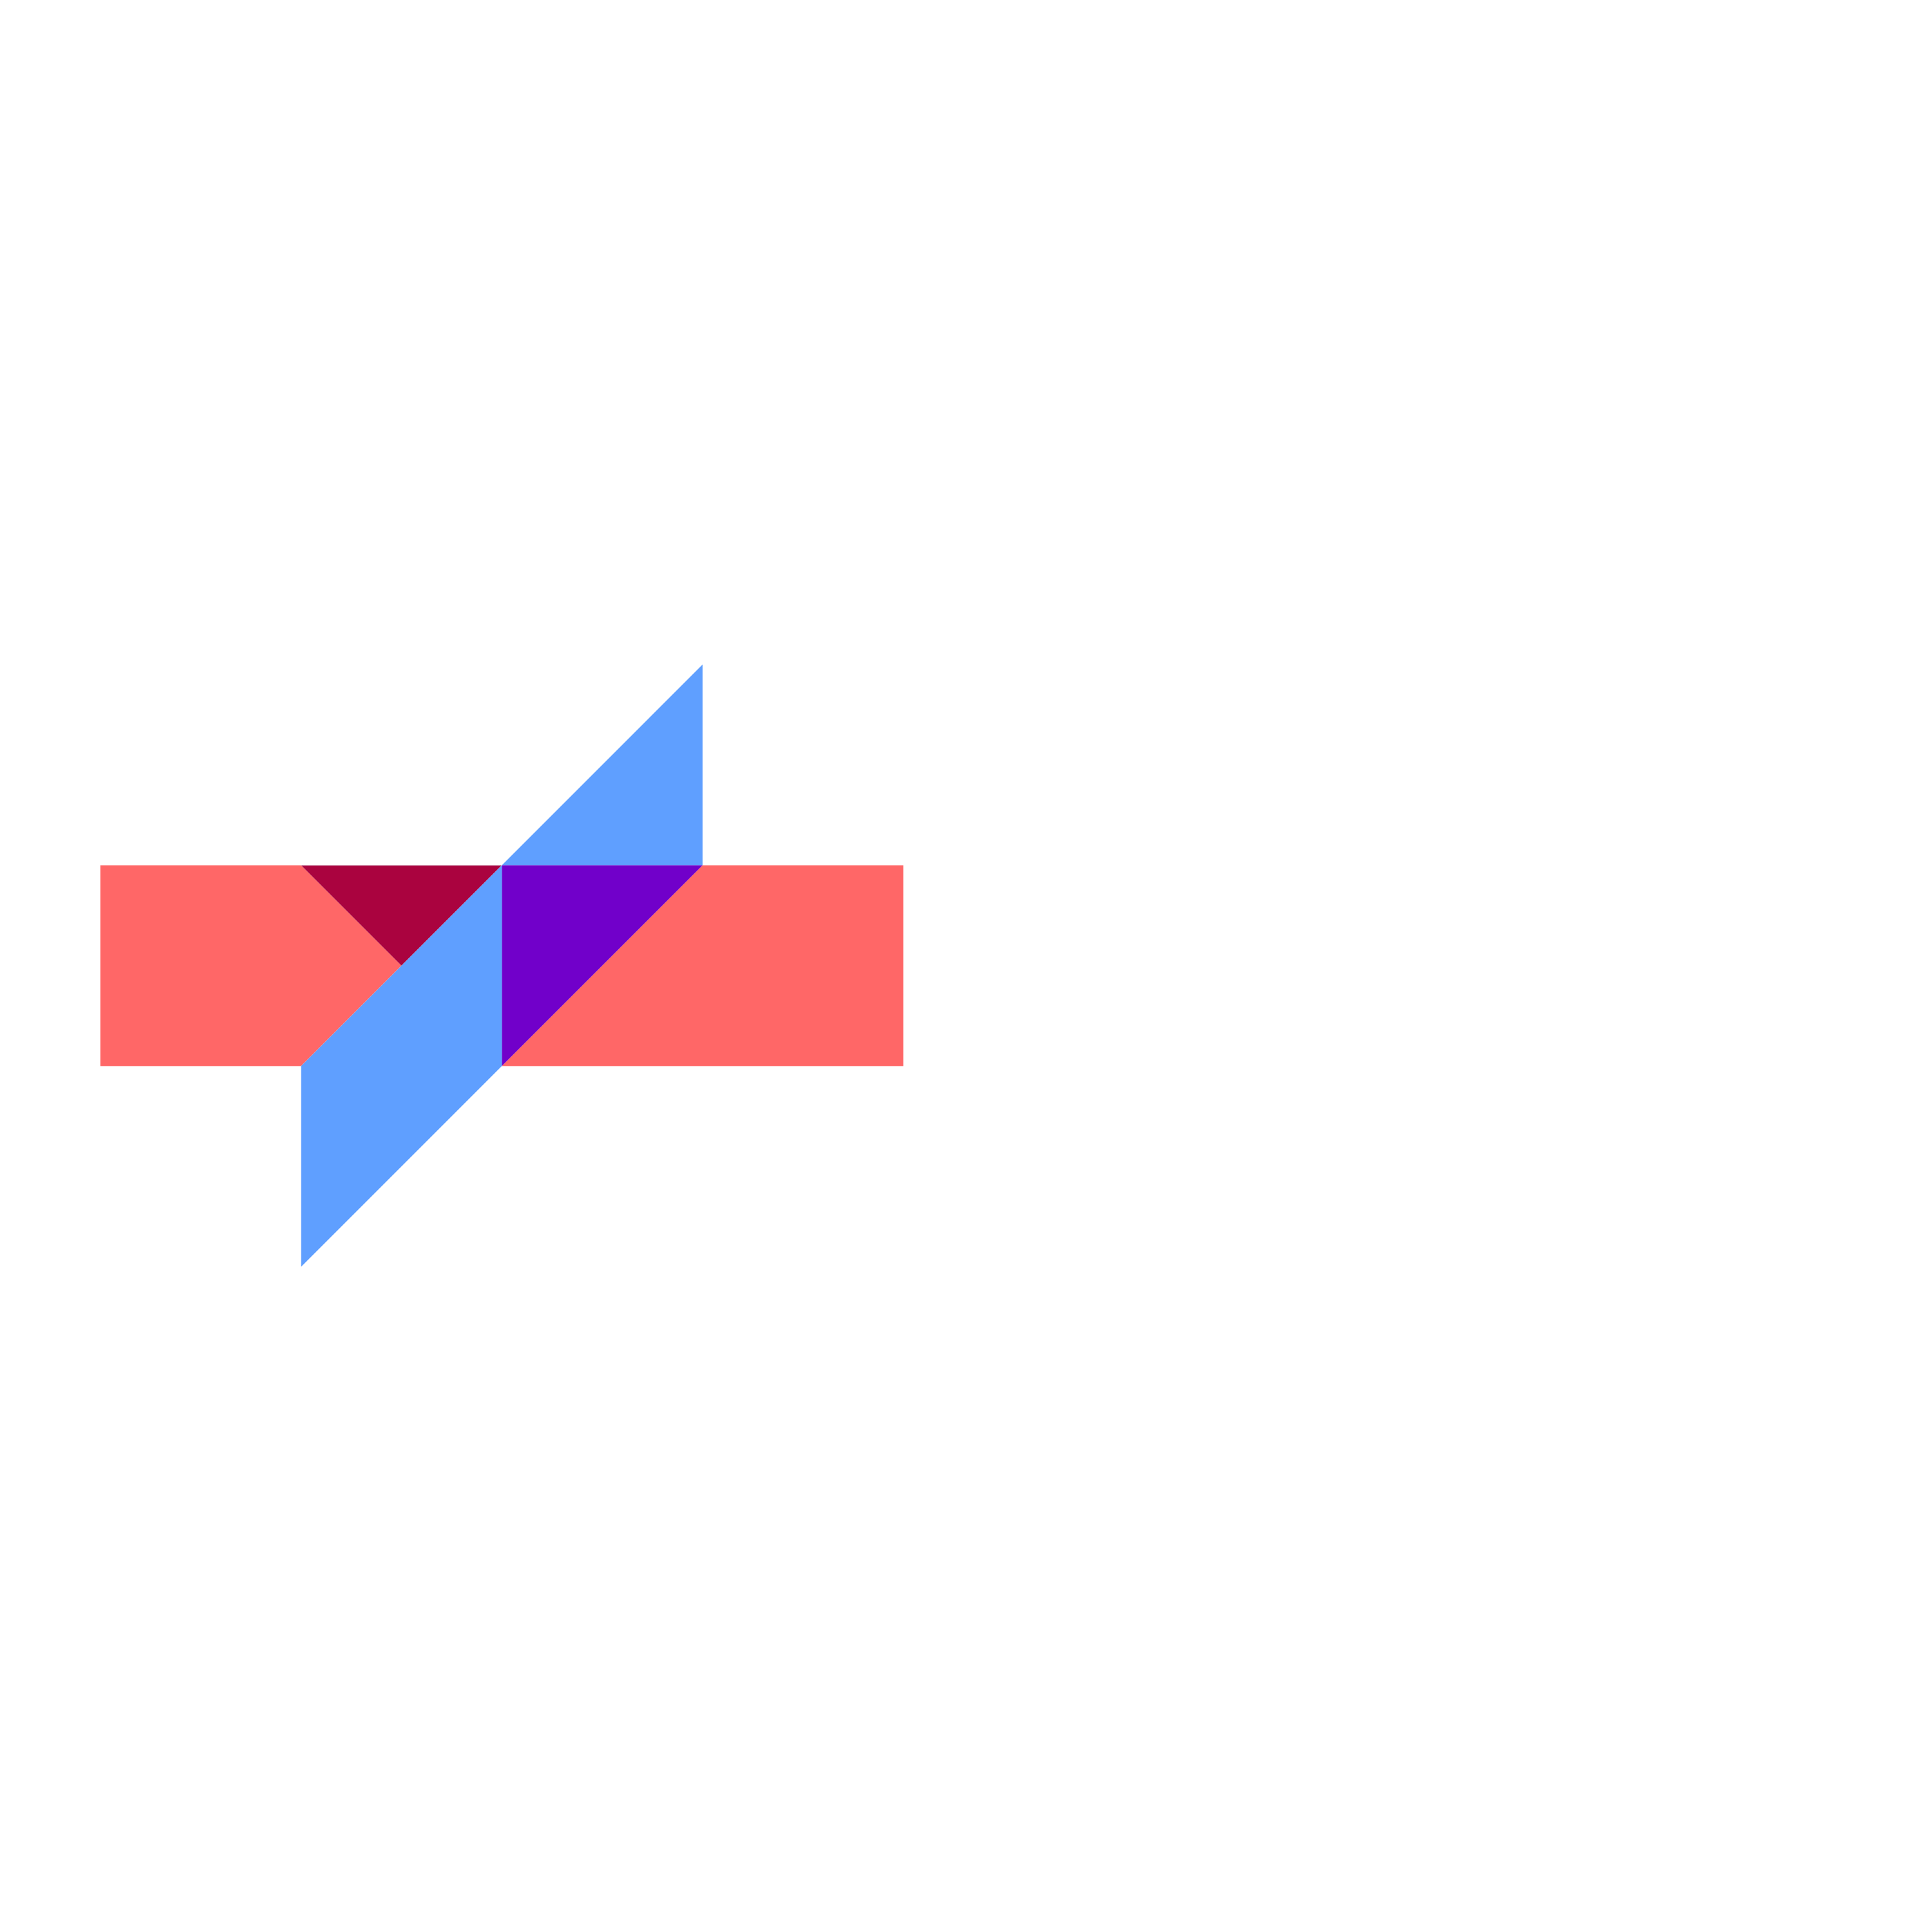 Auma Logo Transparent Picture